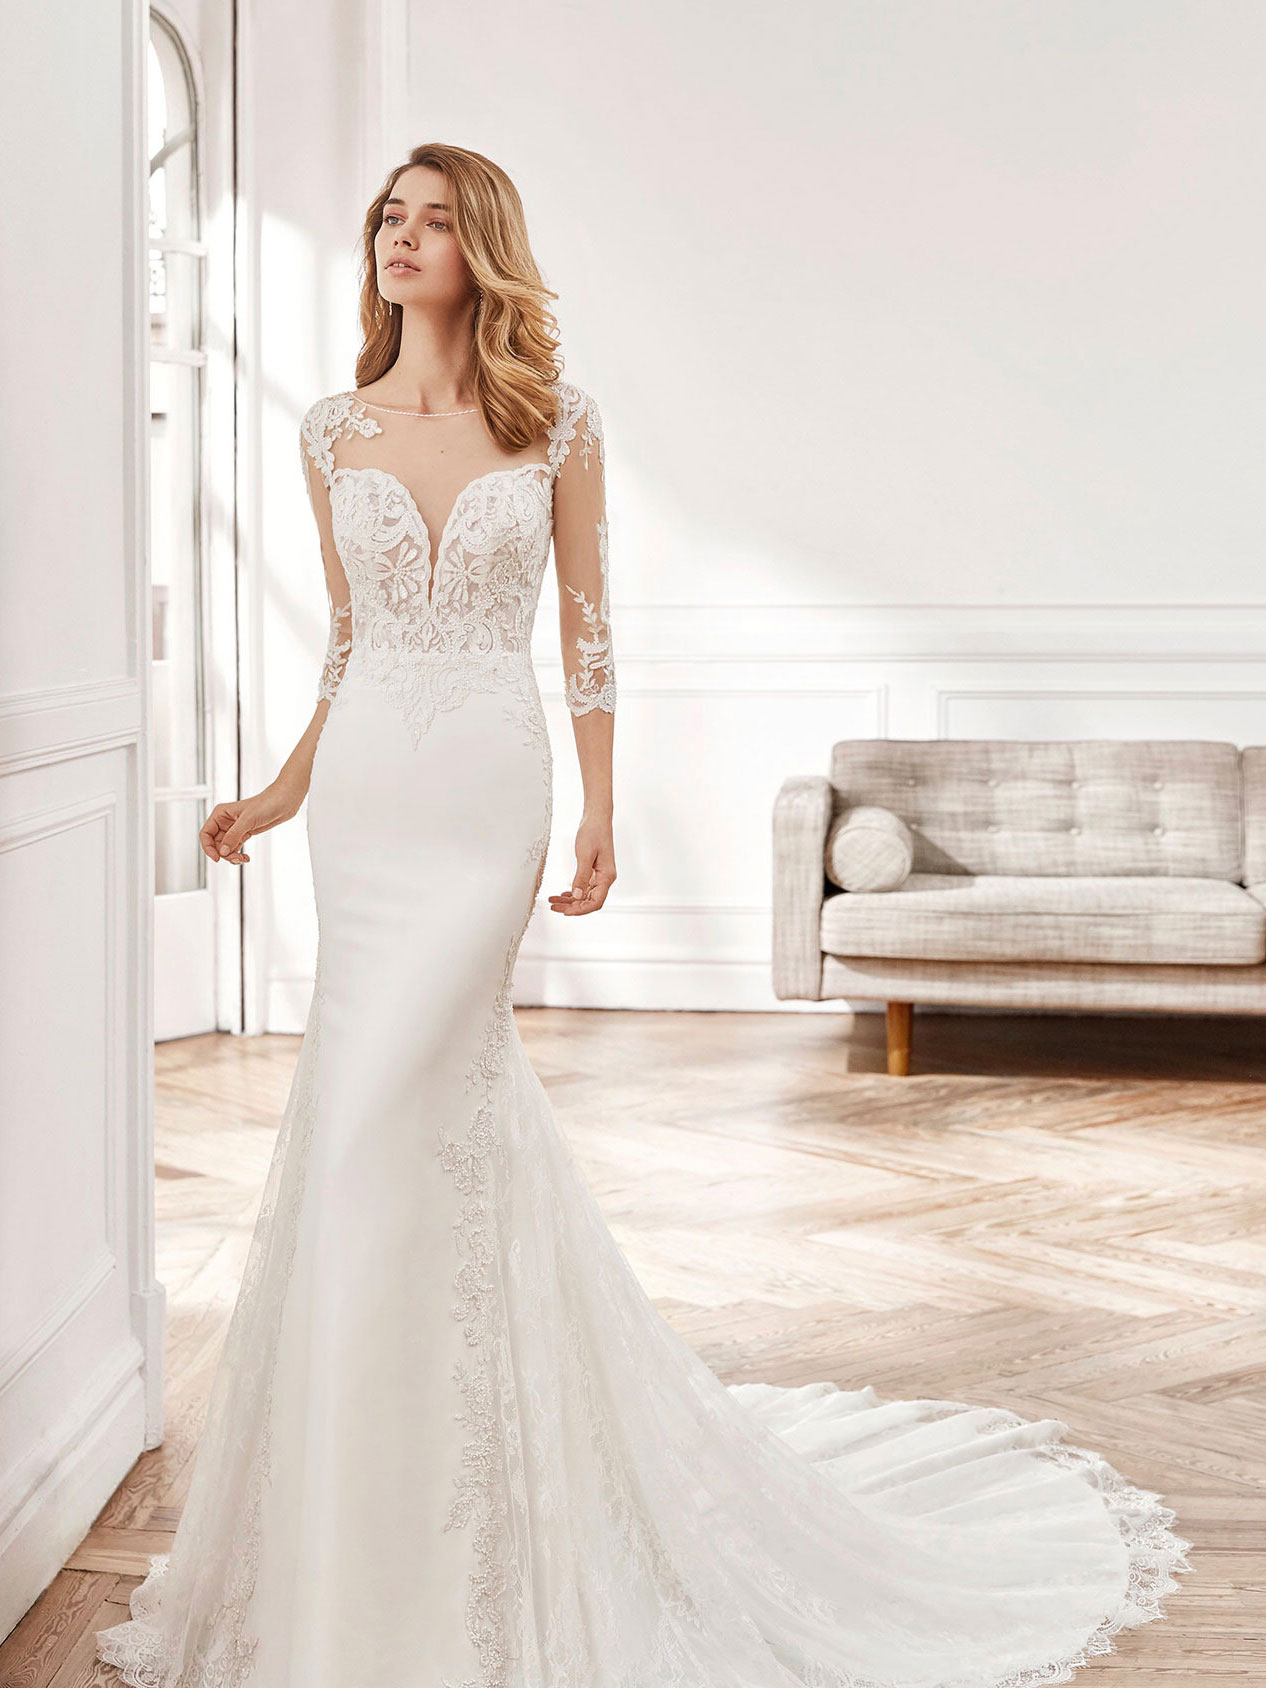 Elegant wedding dress with beautiful crepe and three-quarter-length sleeves